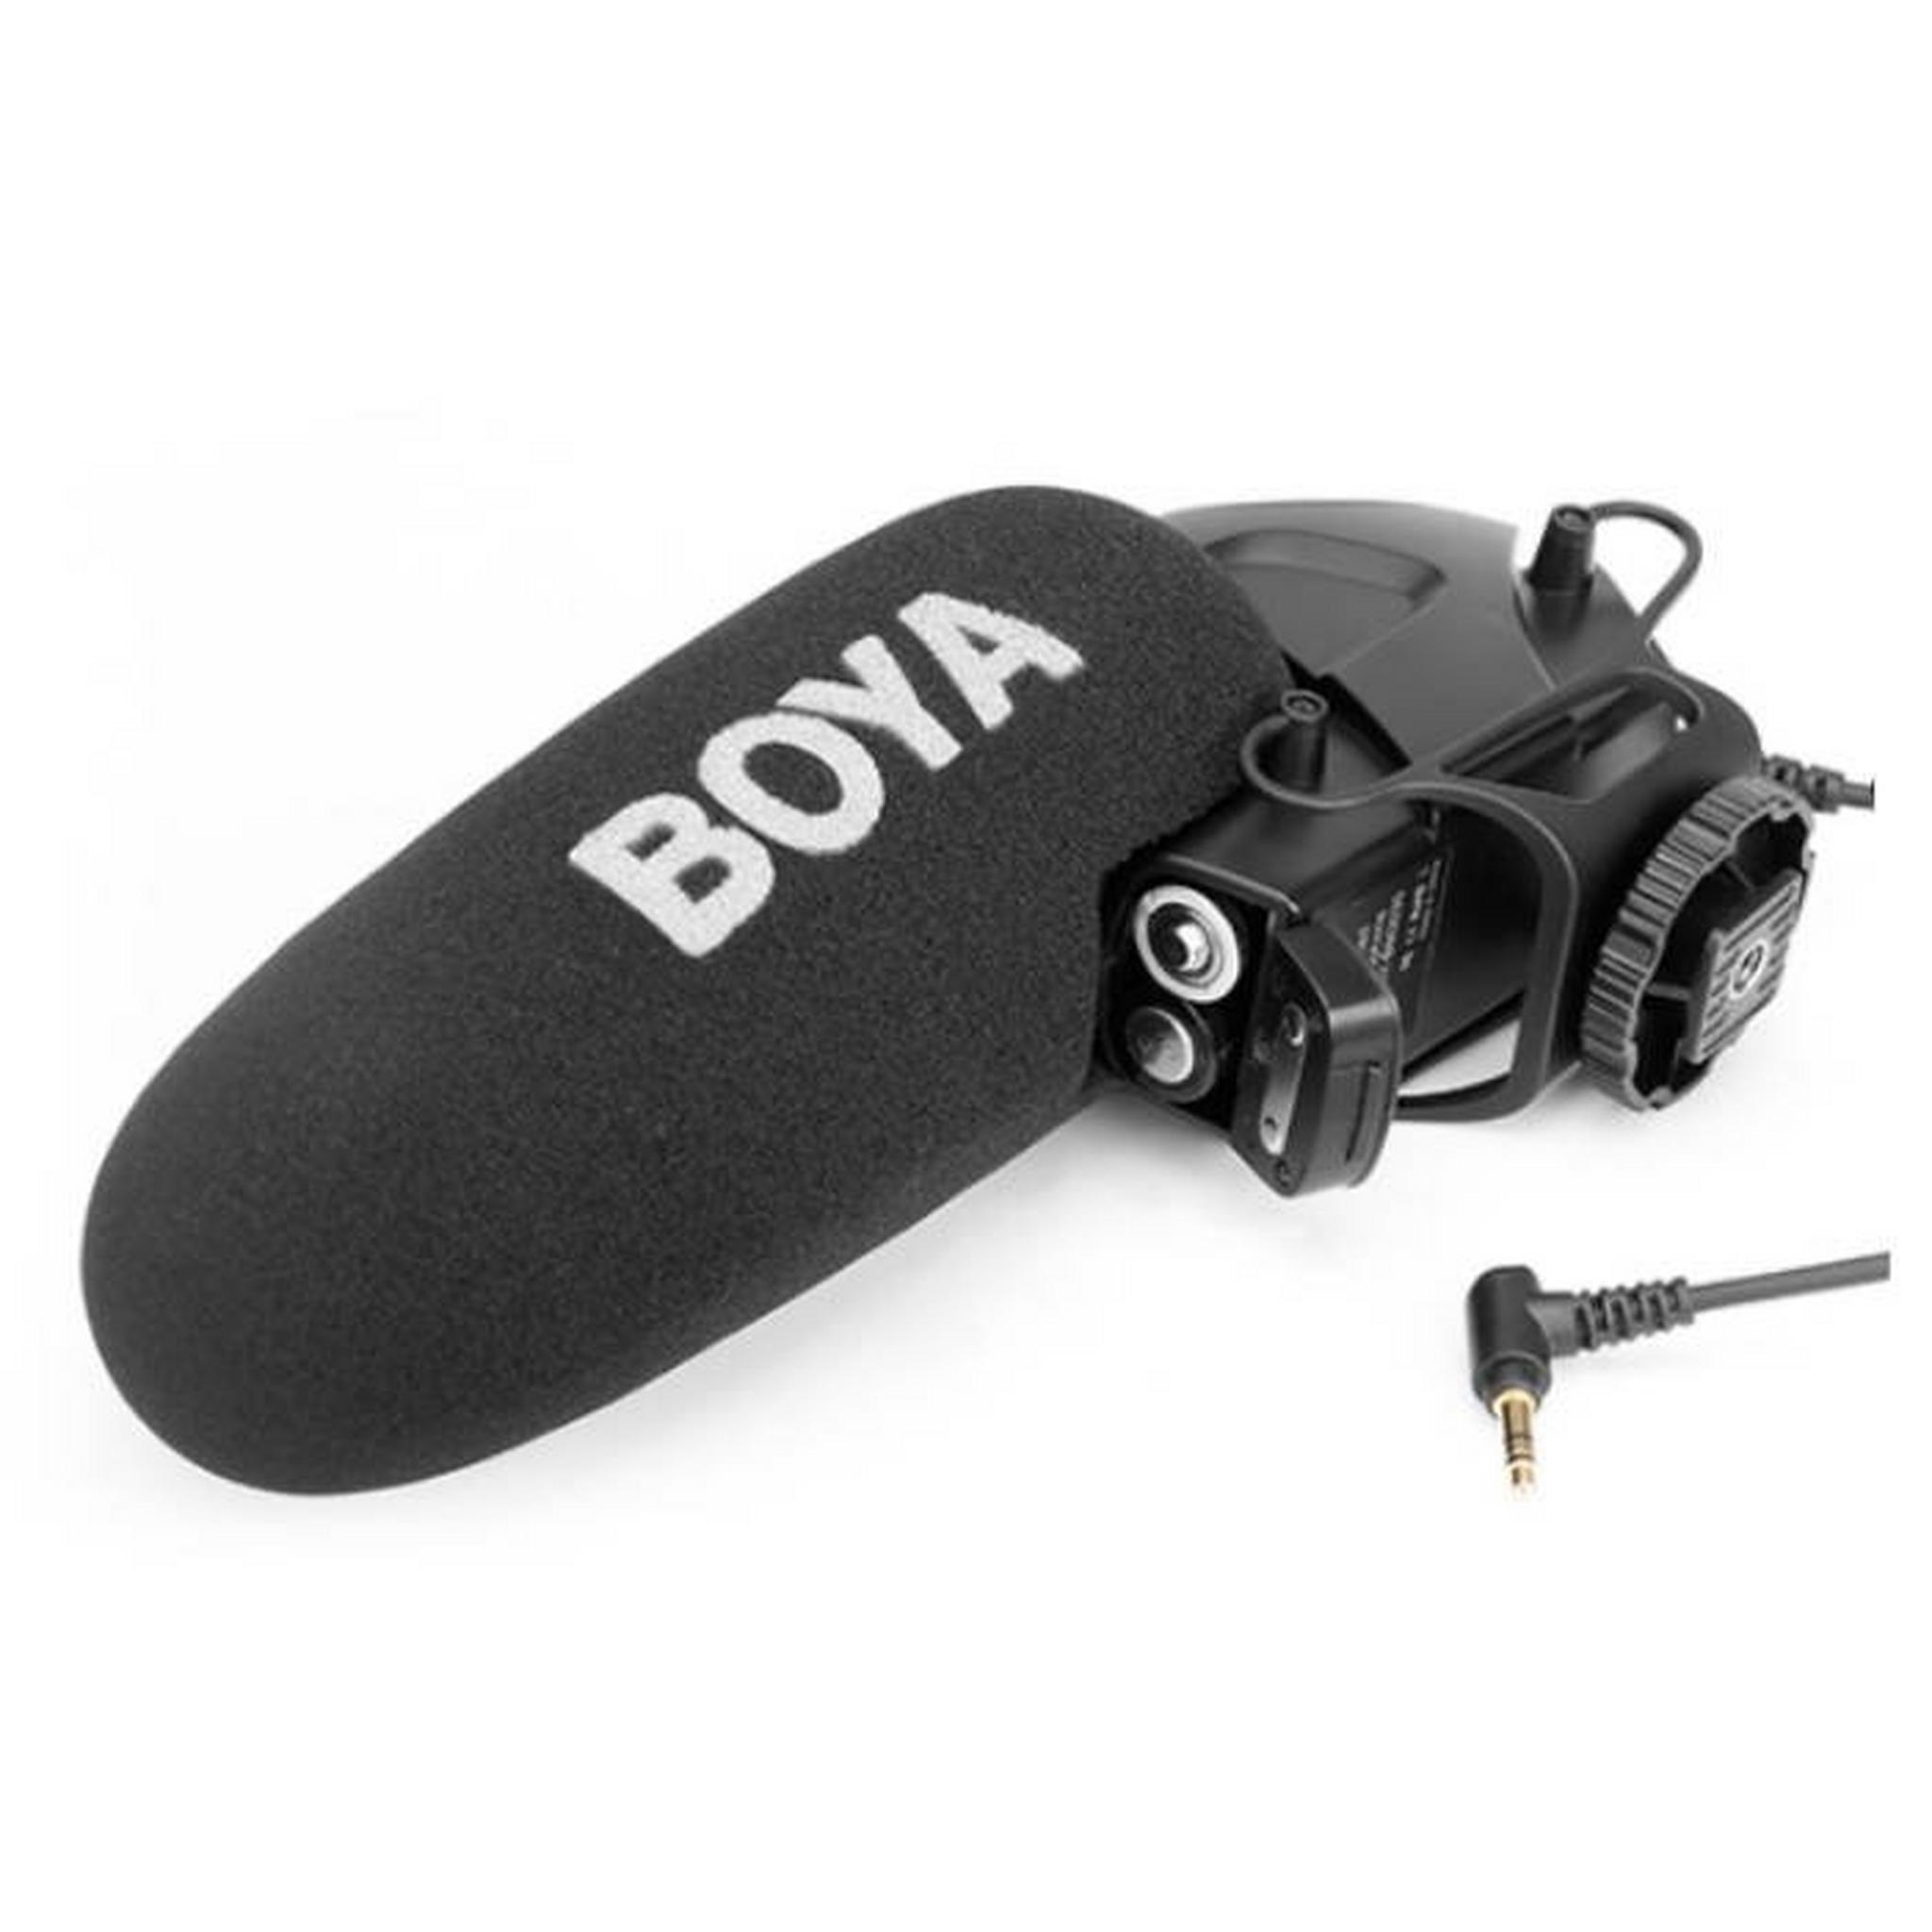 Boya On-Camera Shotgun condenser Microphone for DSLR, Mirrorless and Video Cameras, BY-BM3030 – Black